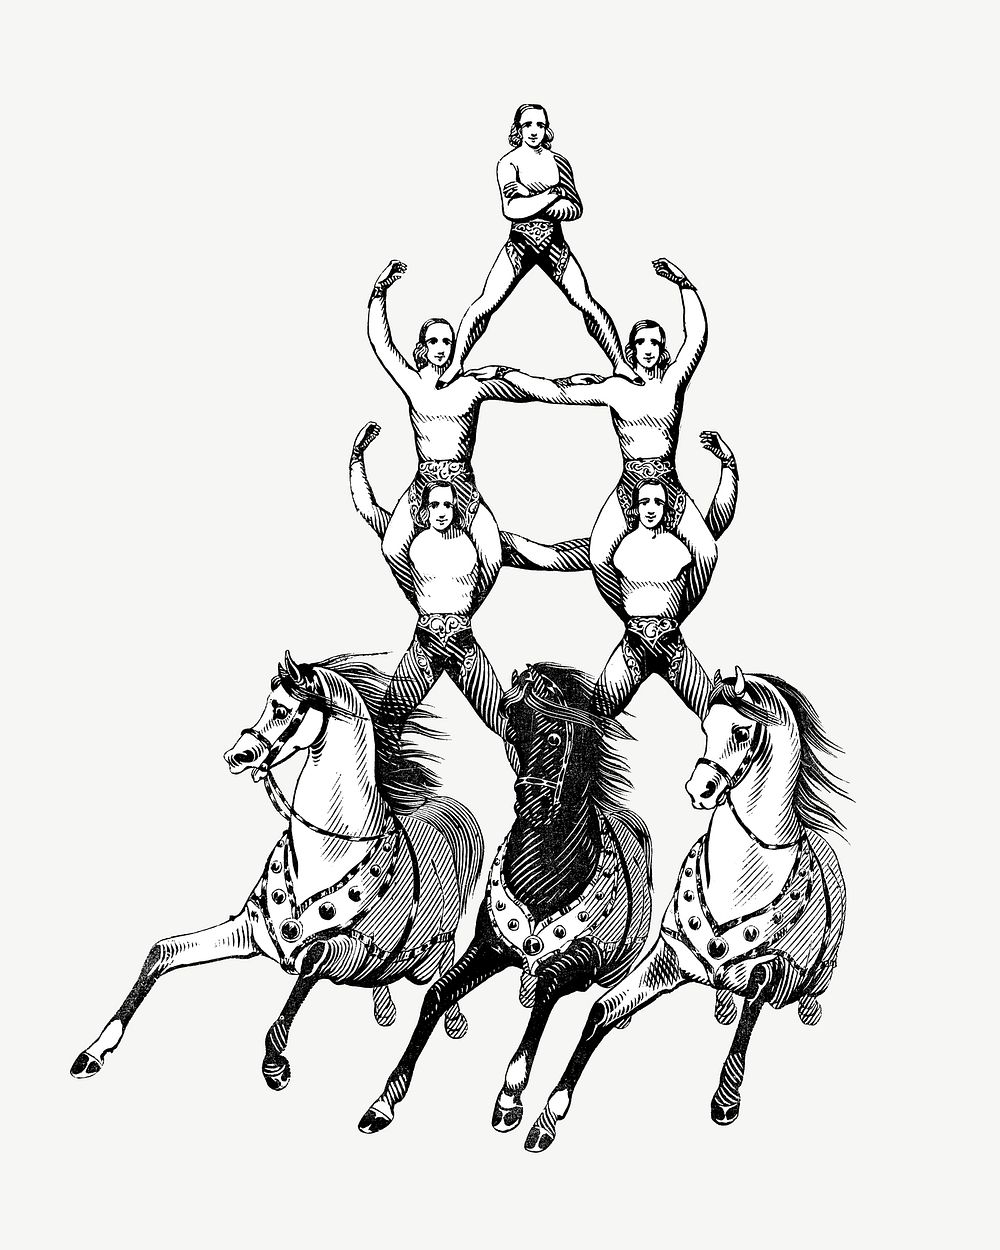 Vintage acrobats on three horses psd. Remixed by rawpixel. 